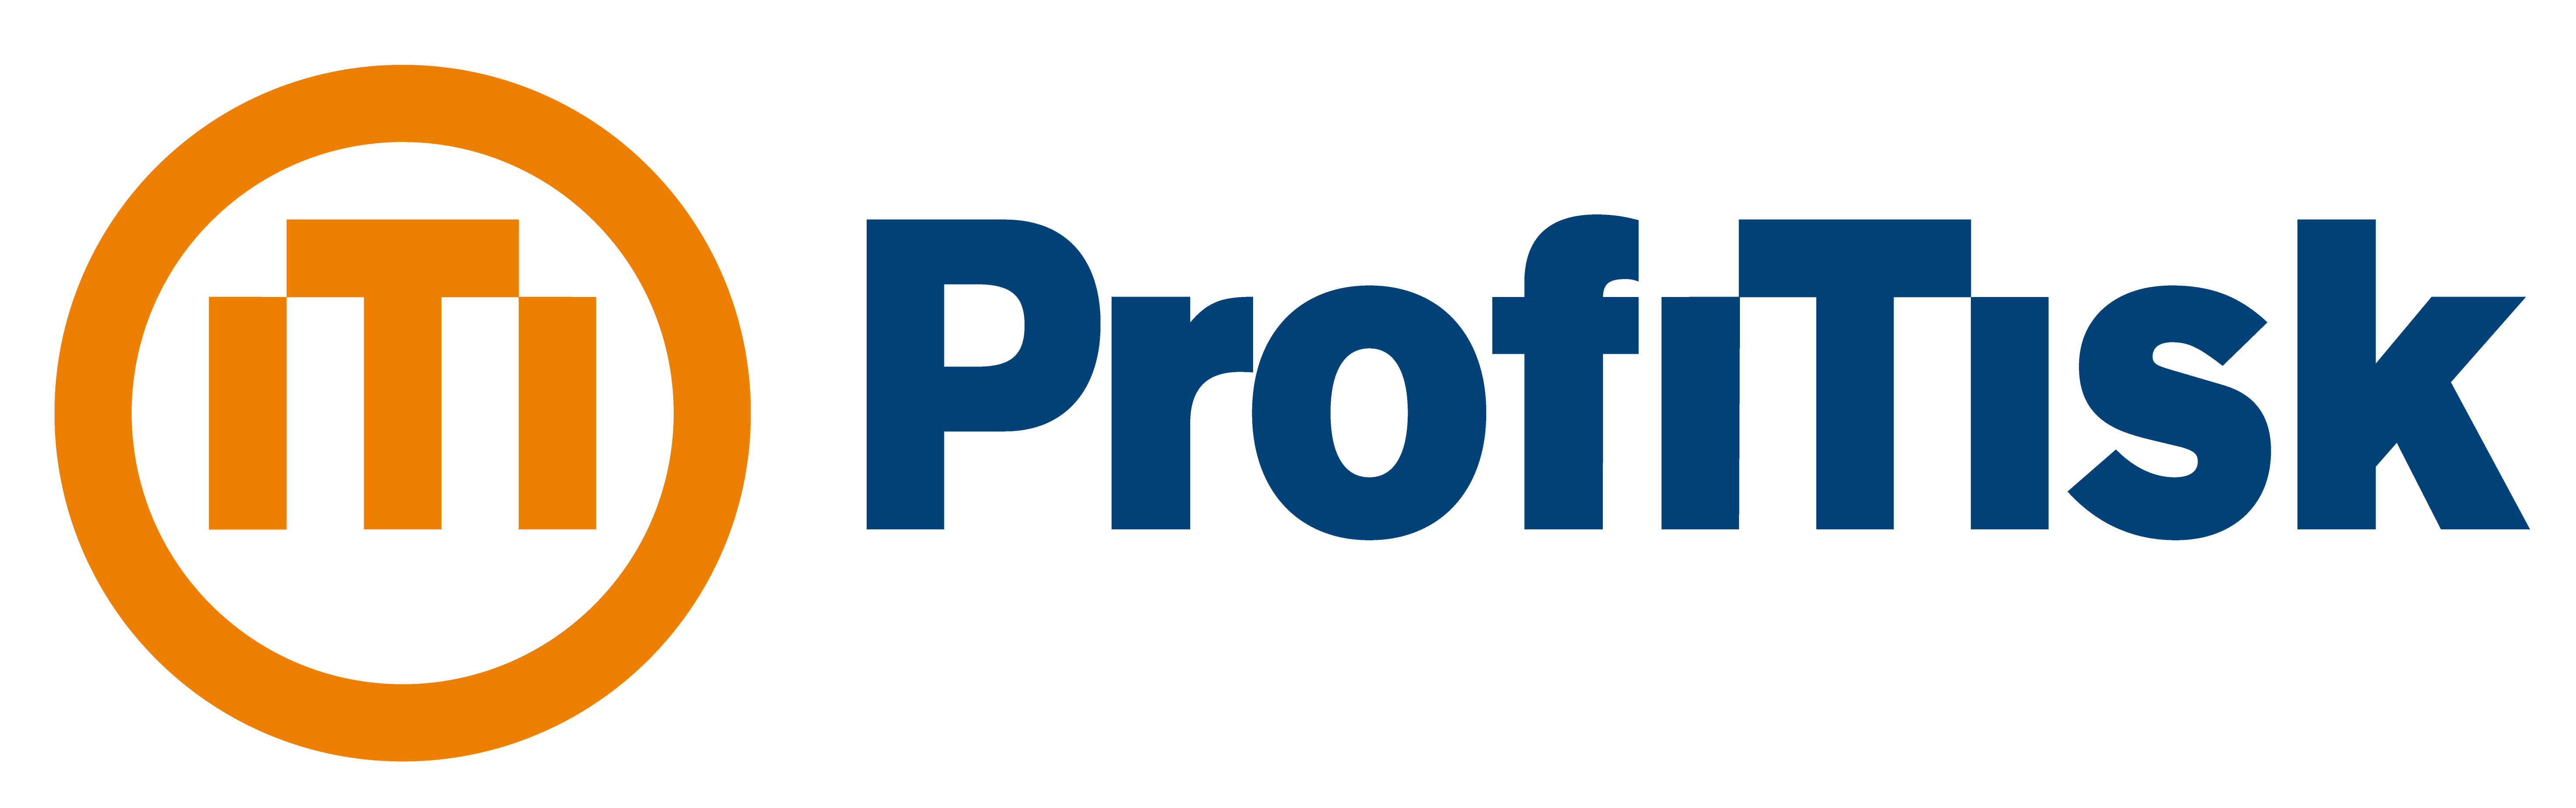 logo-profitisk